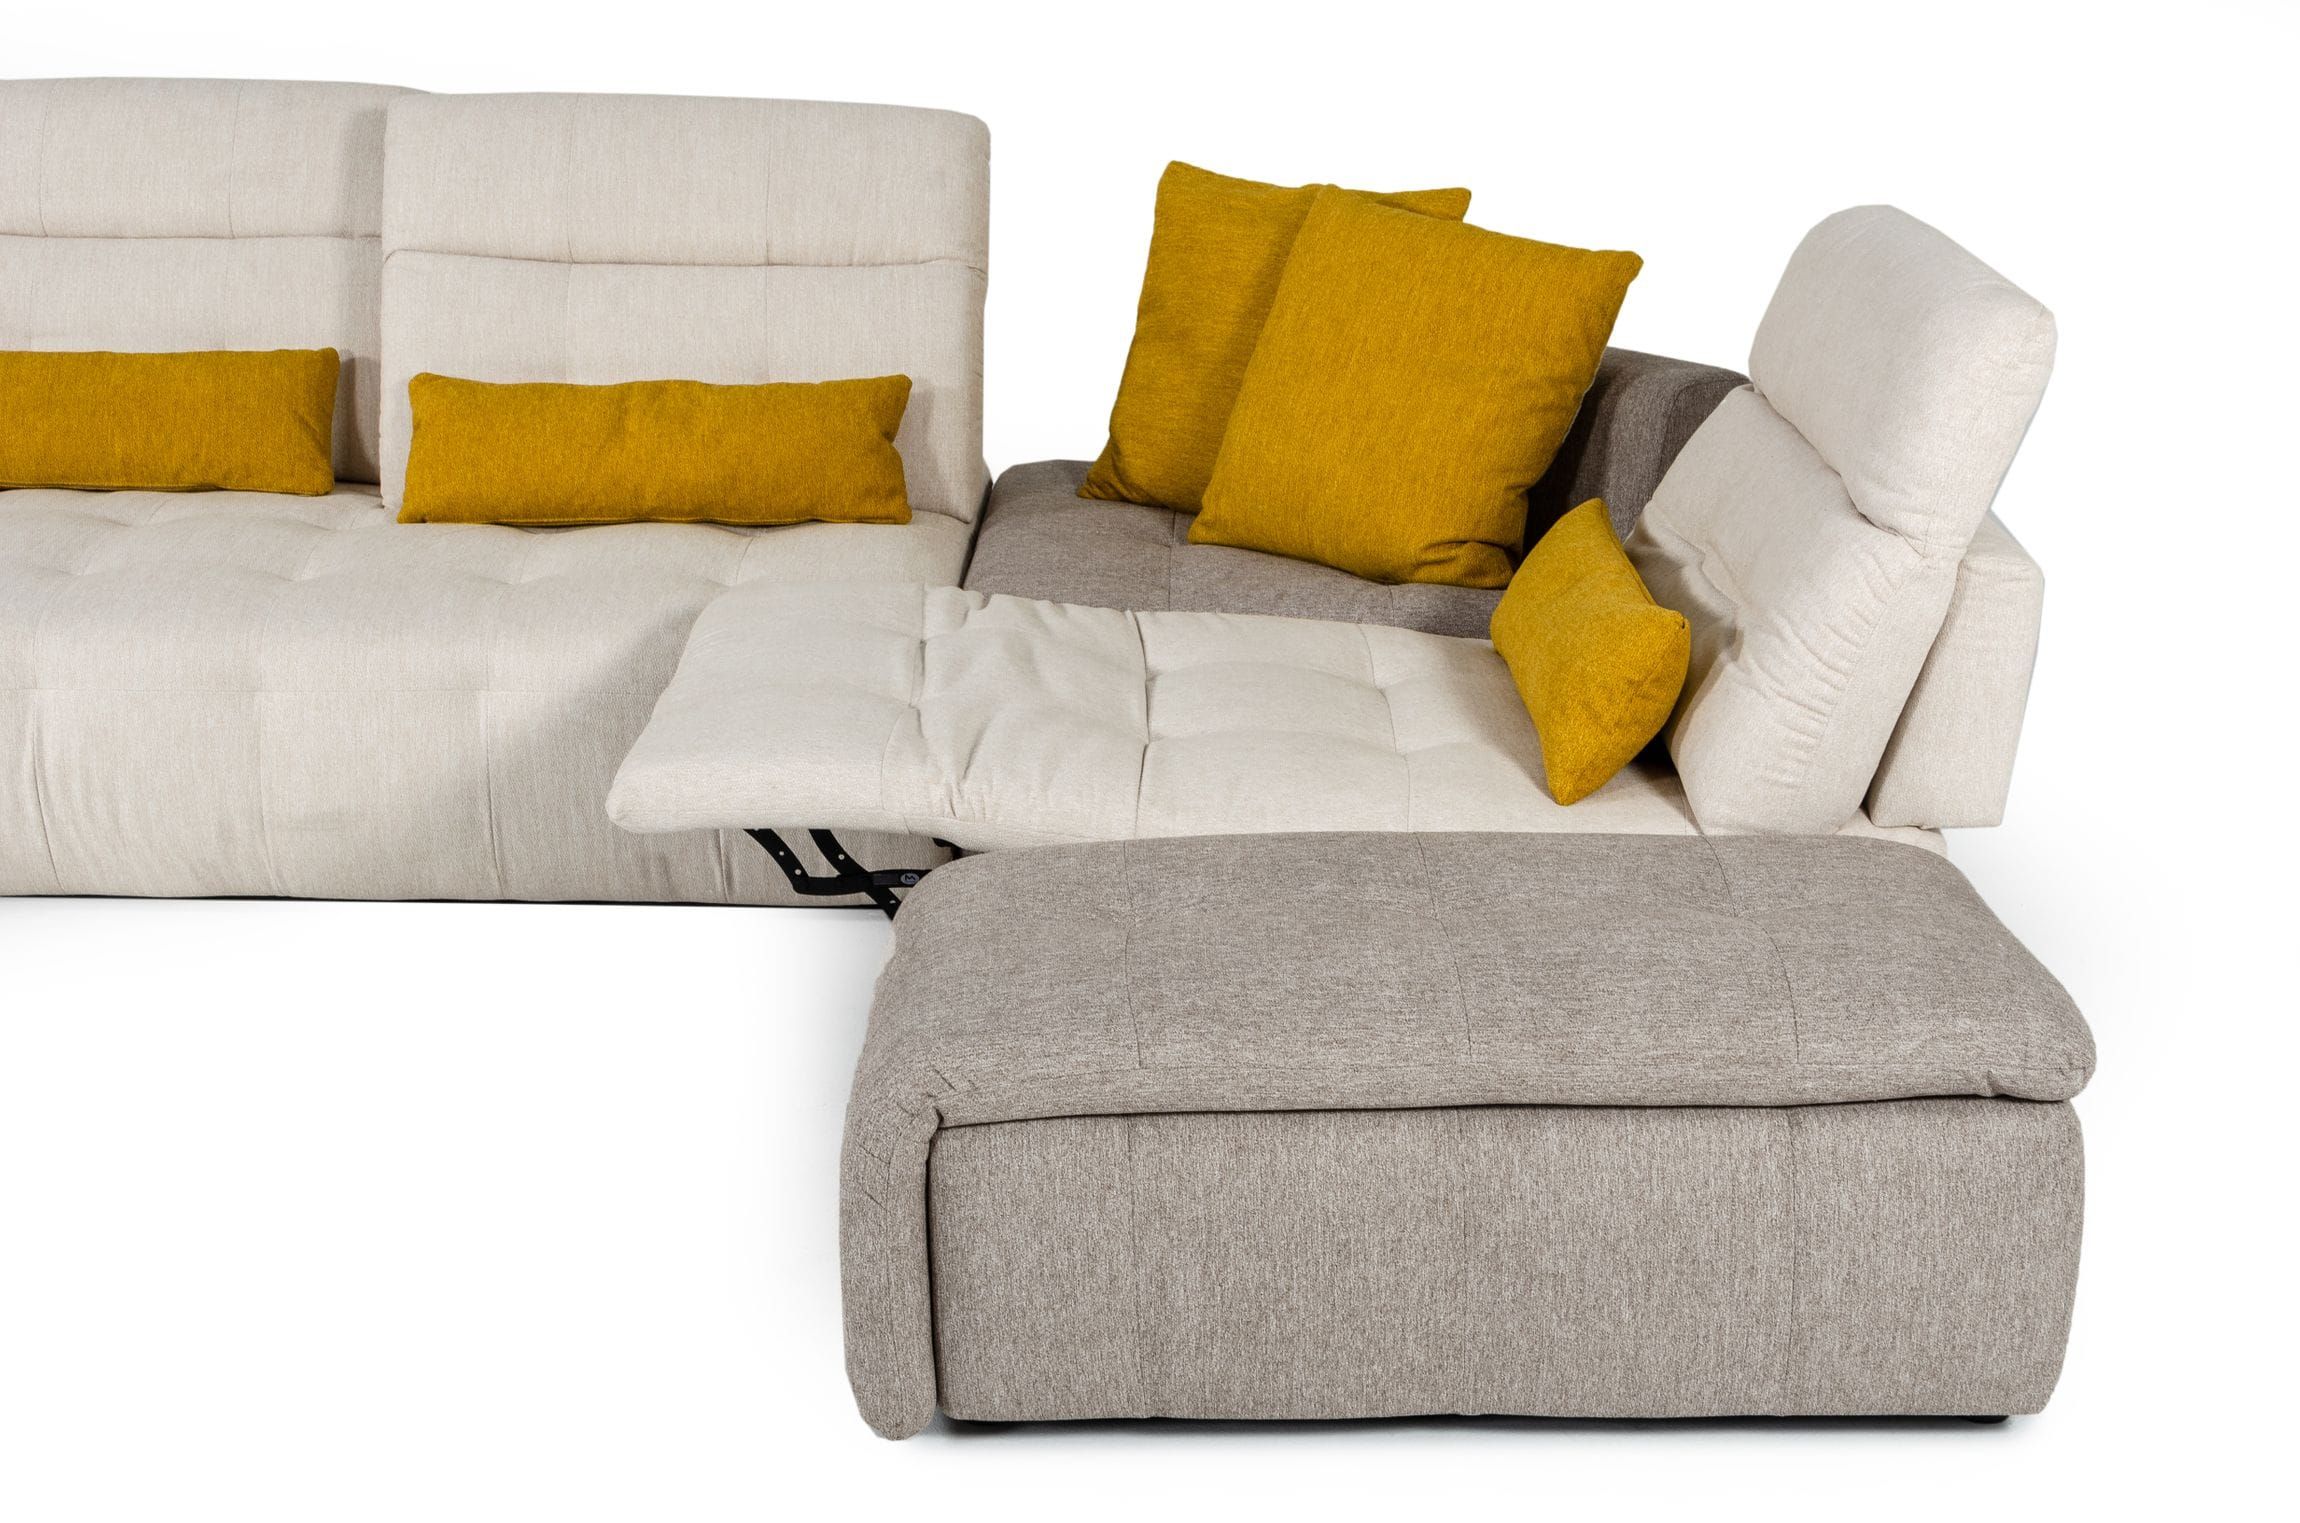 David Ferrari Natura - Italian Modern Light Taupe Fabric Sectional Sofa with Manual Recliner